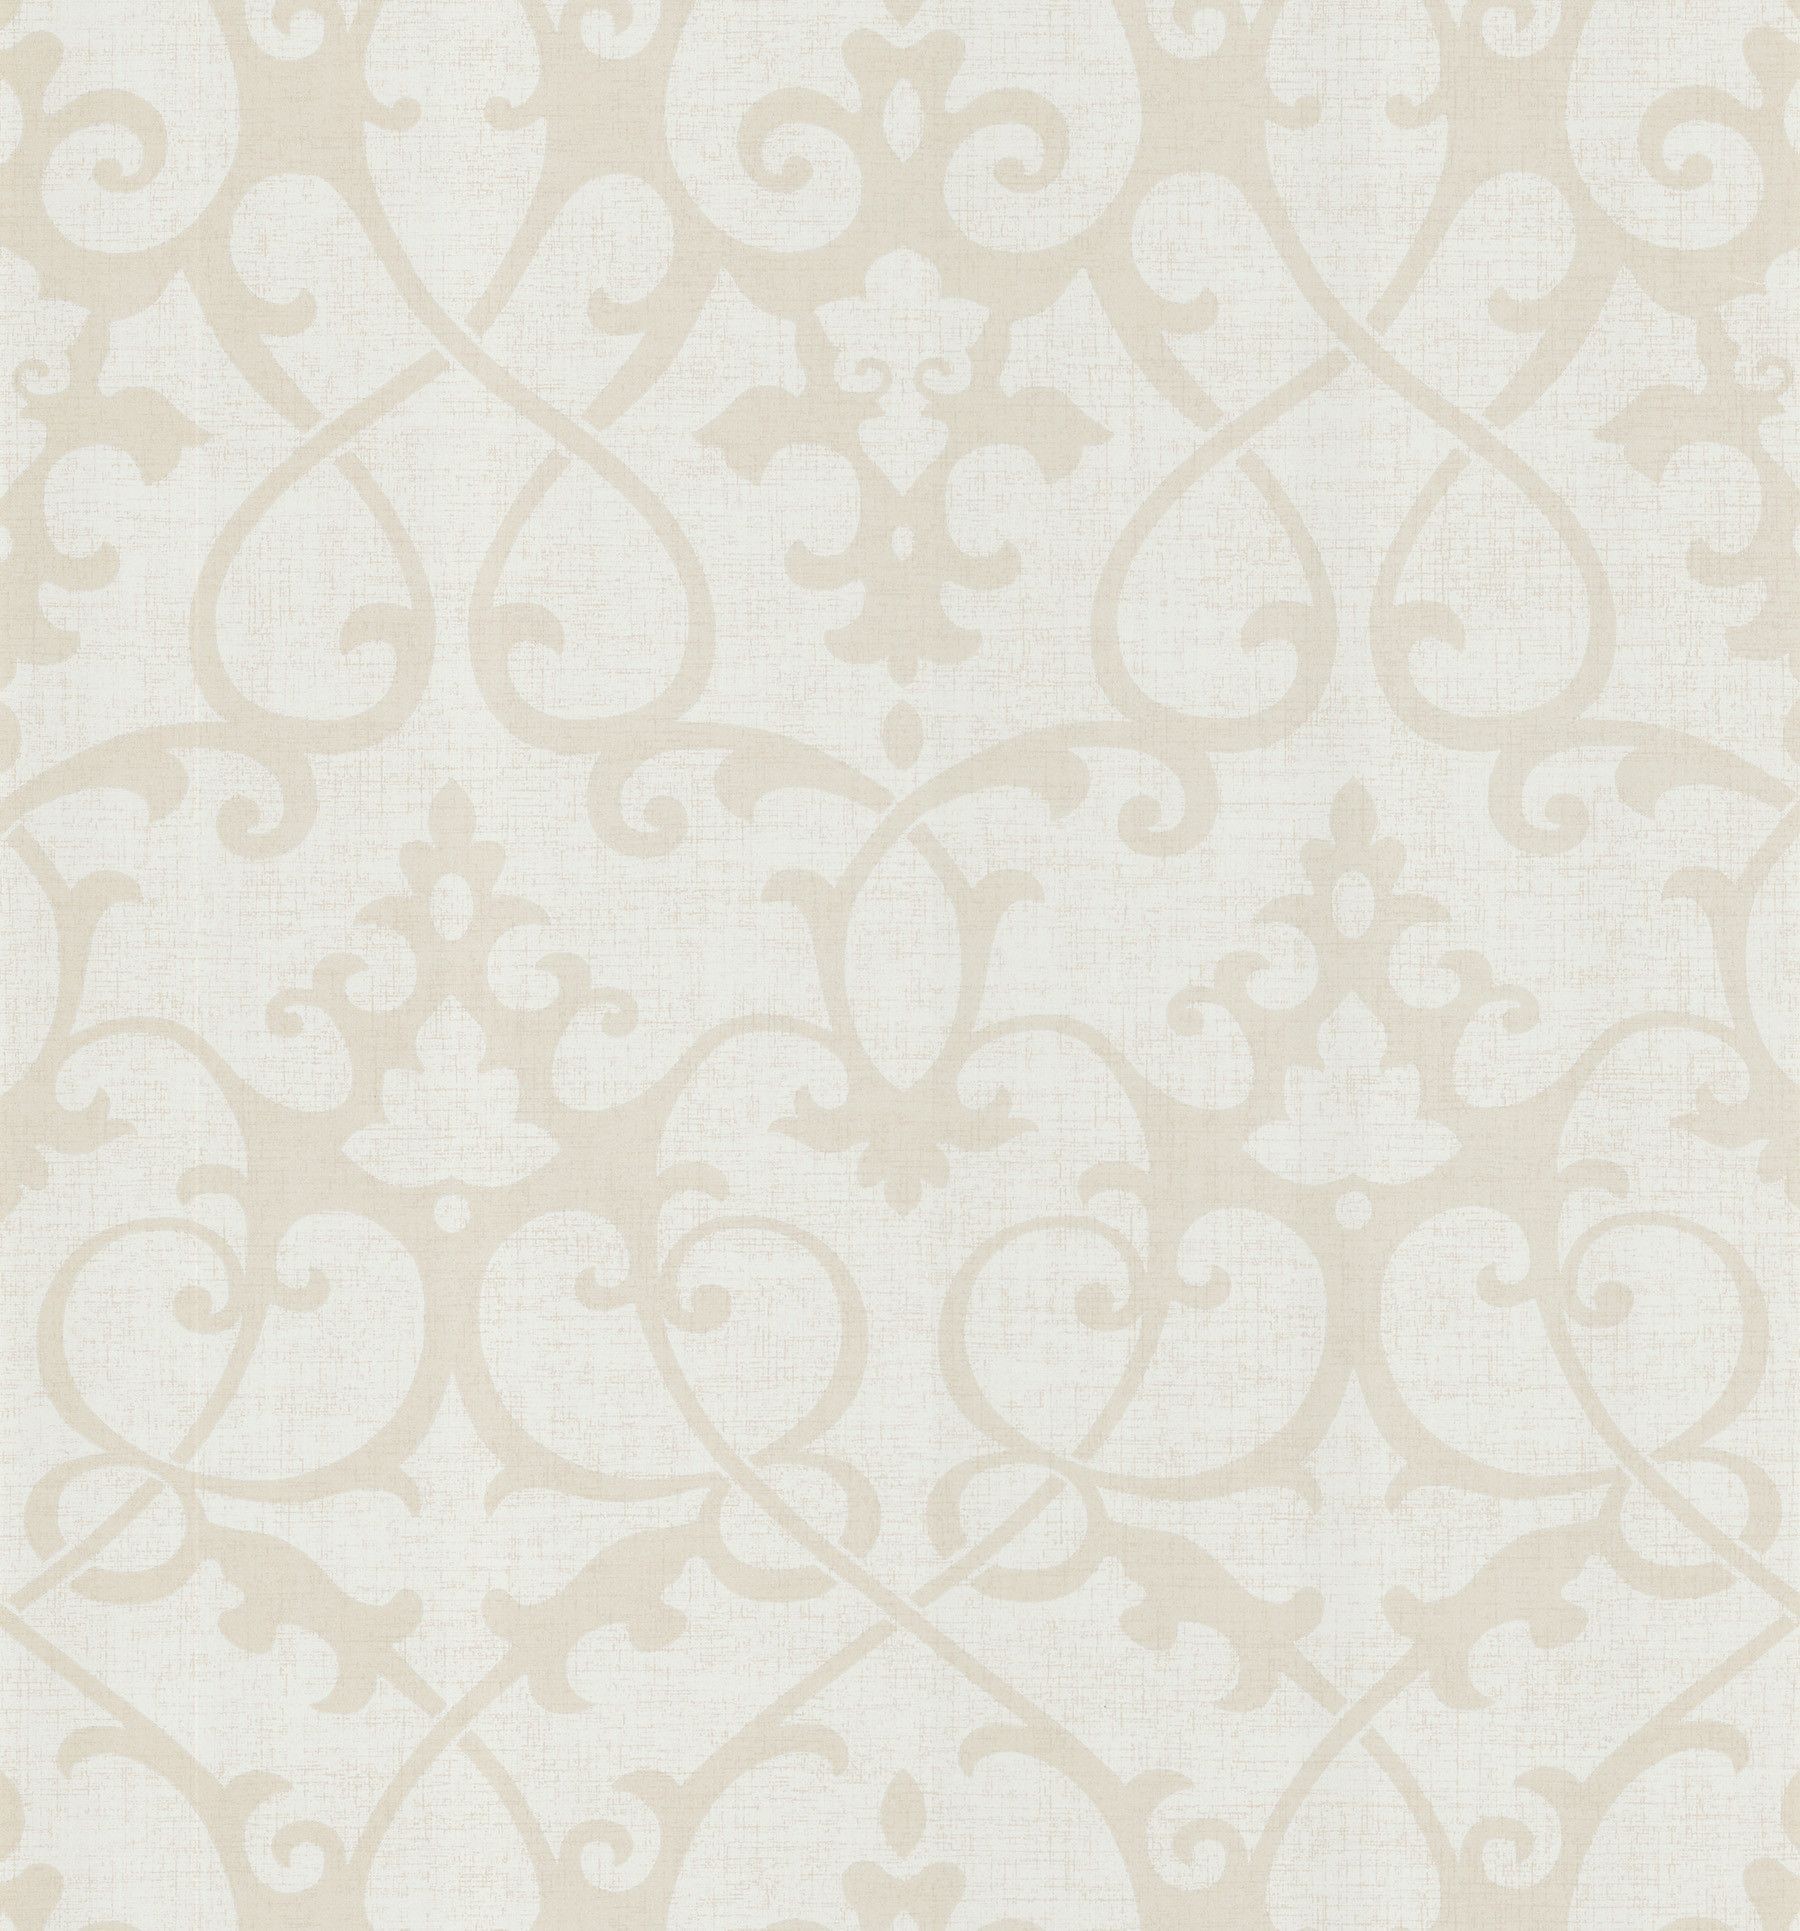 1800x1931 Octavia Damask Swirl Wallpaper in Beige by Brewster Home Fashions